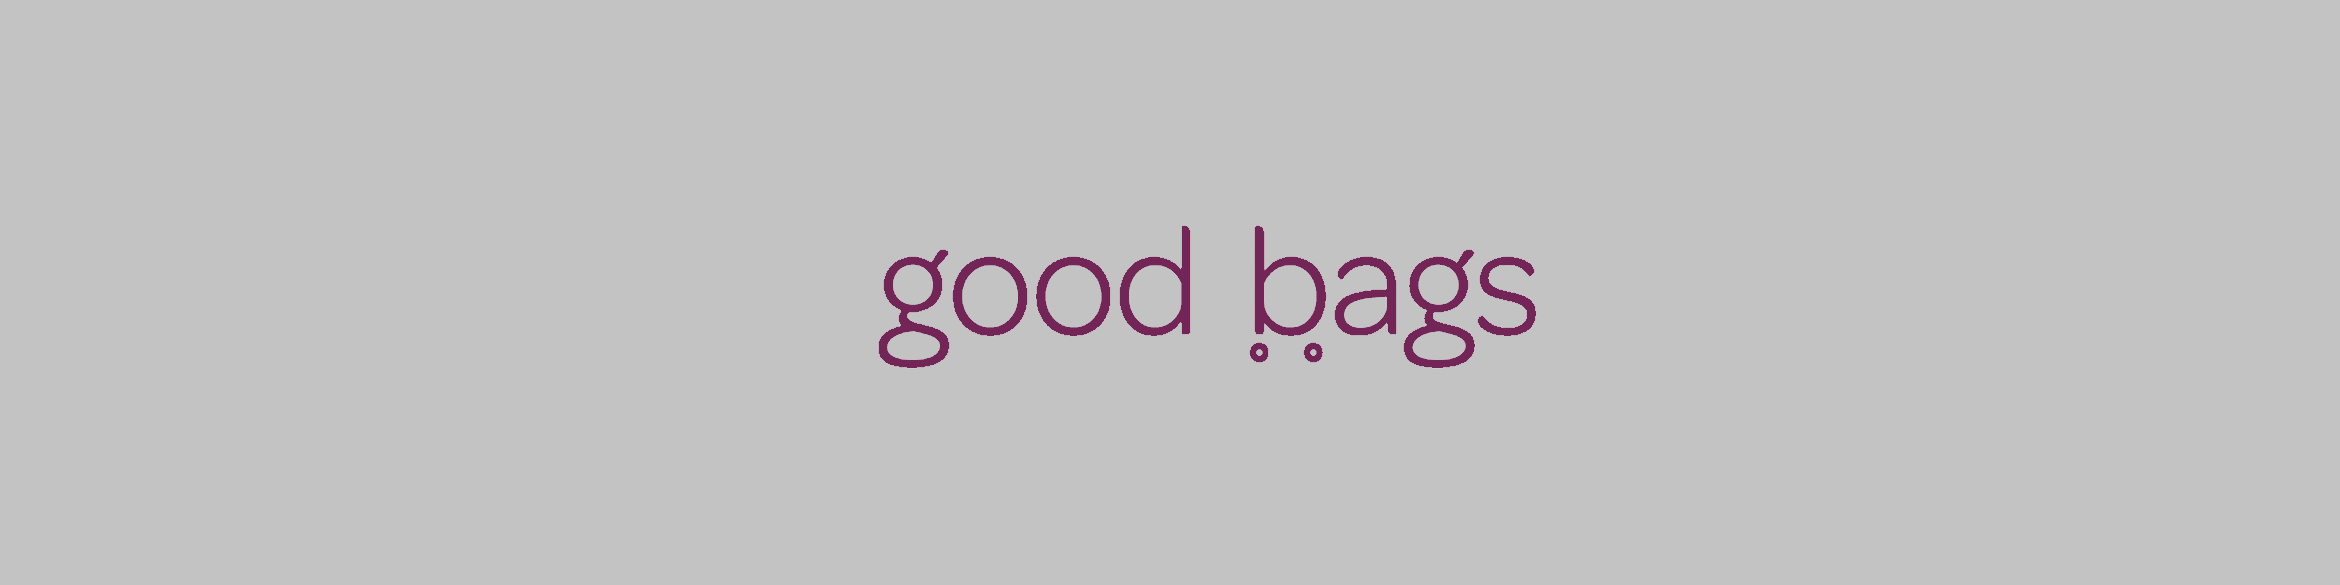 good_bags_header.png